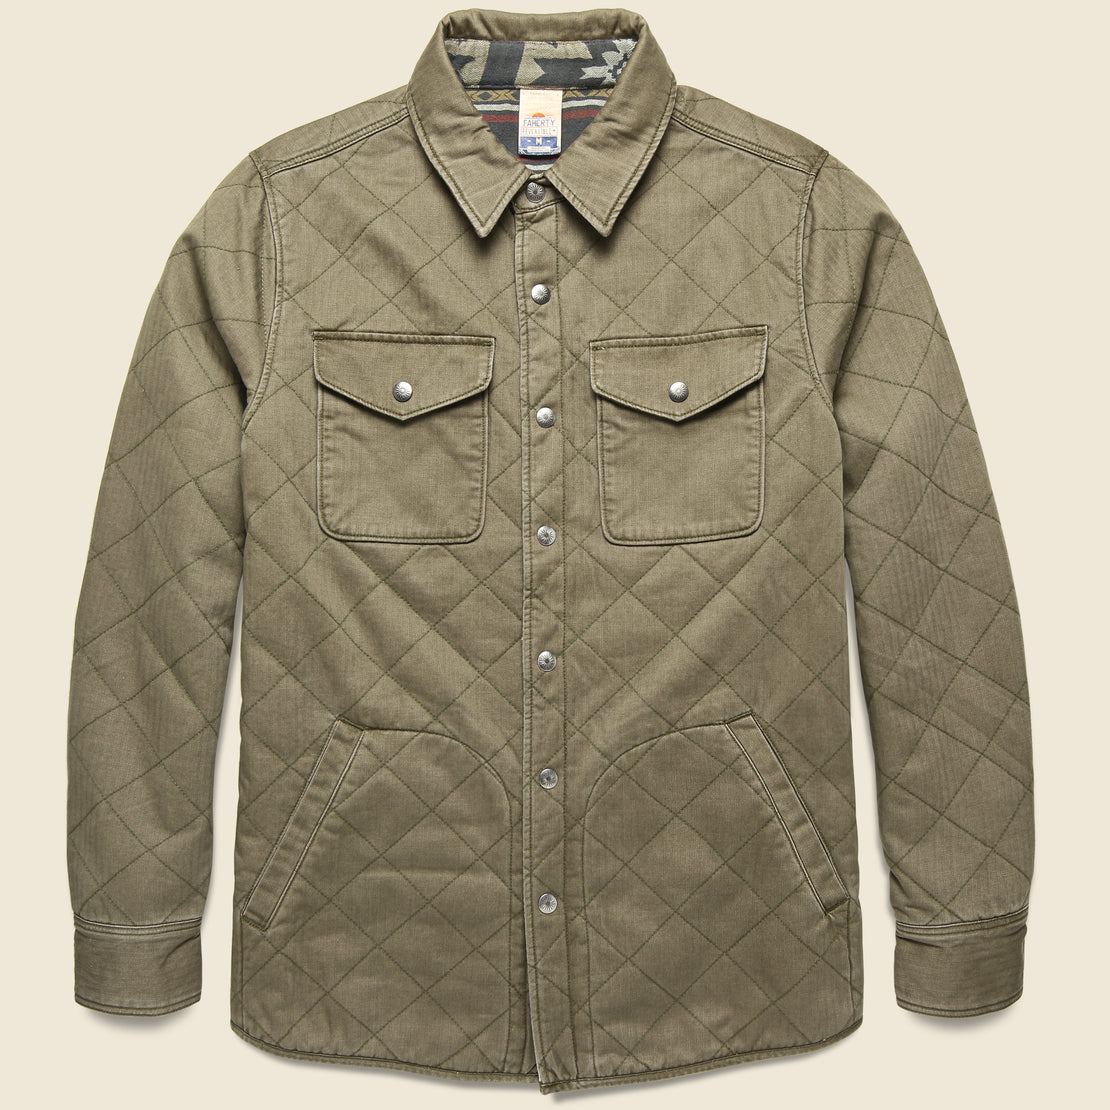 Reverse Bondi Jacket - Olive/Black Star Nation - Faherty - STAG Provisions - Outerwear - Coat / Jacket